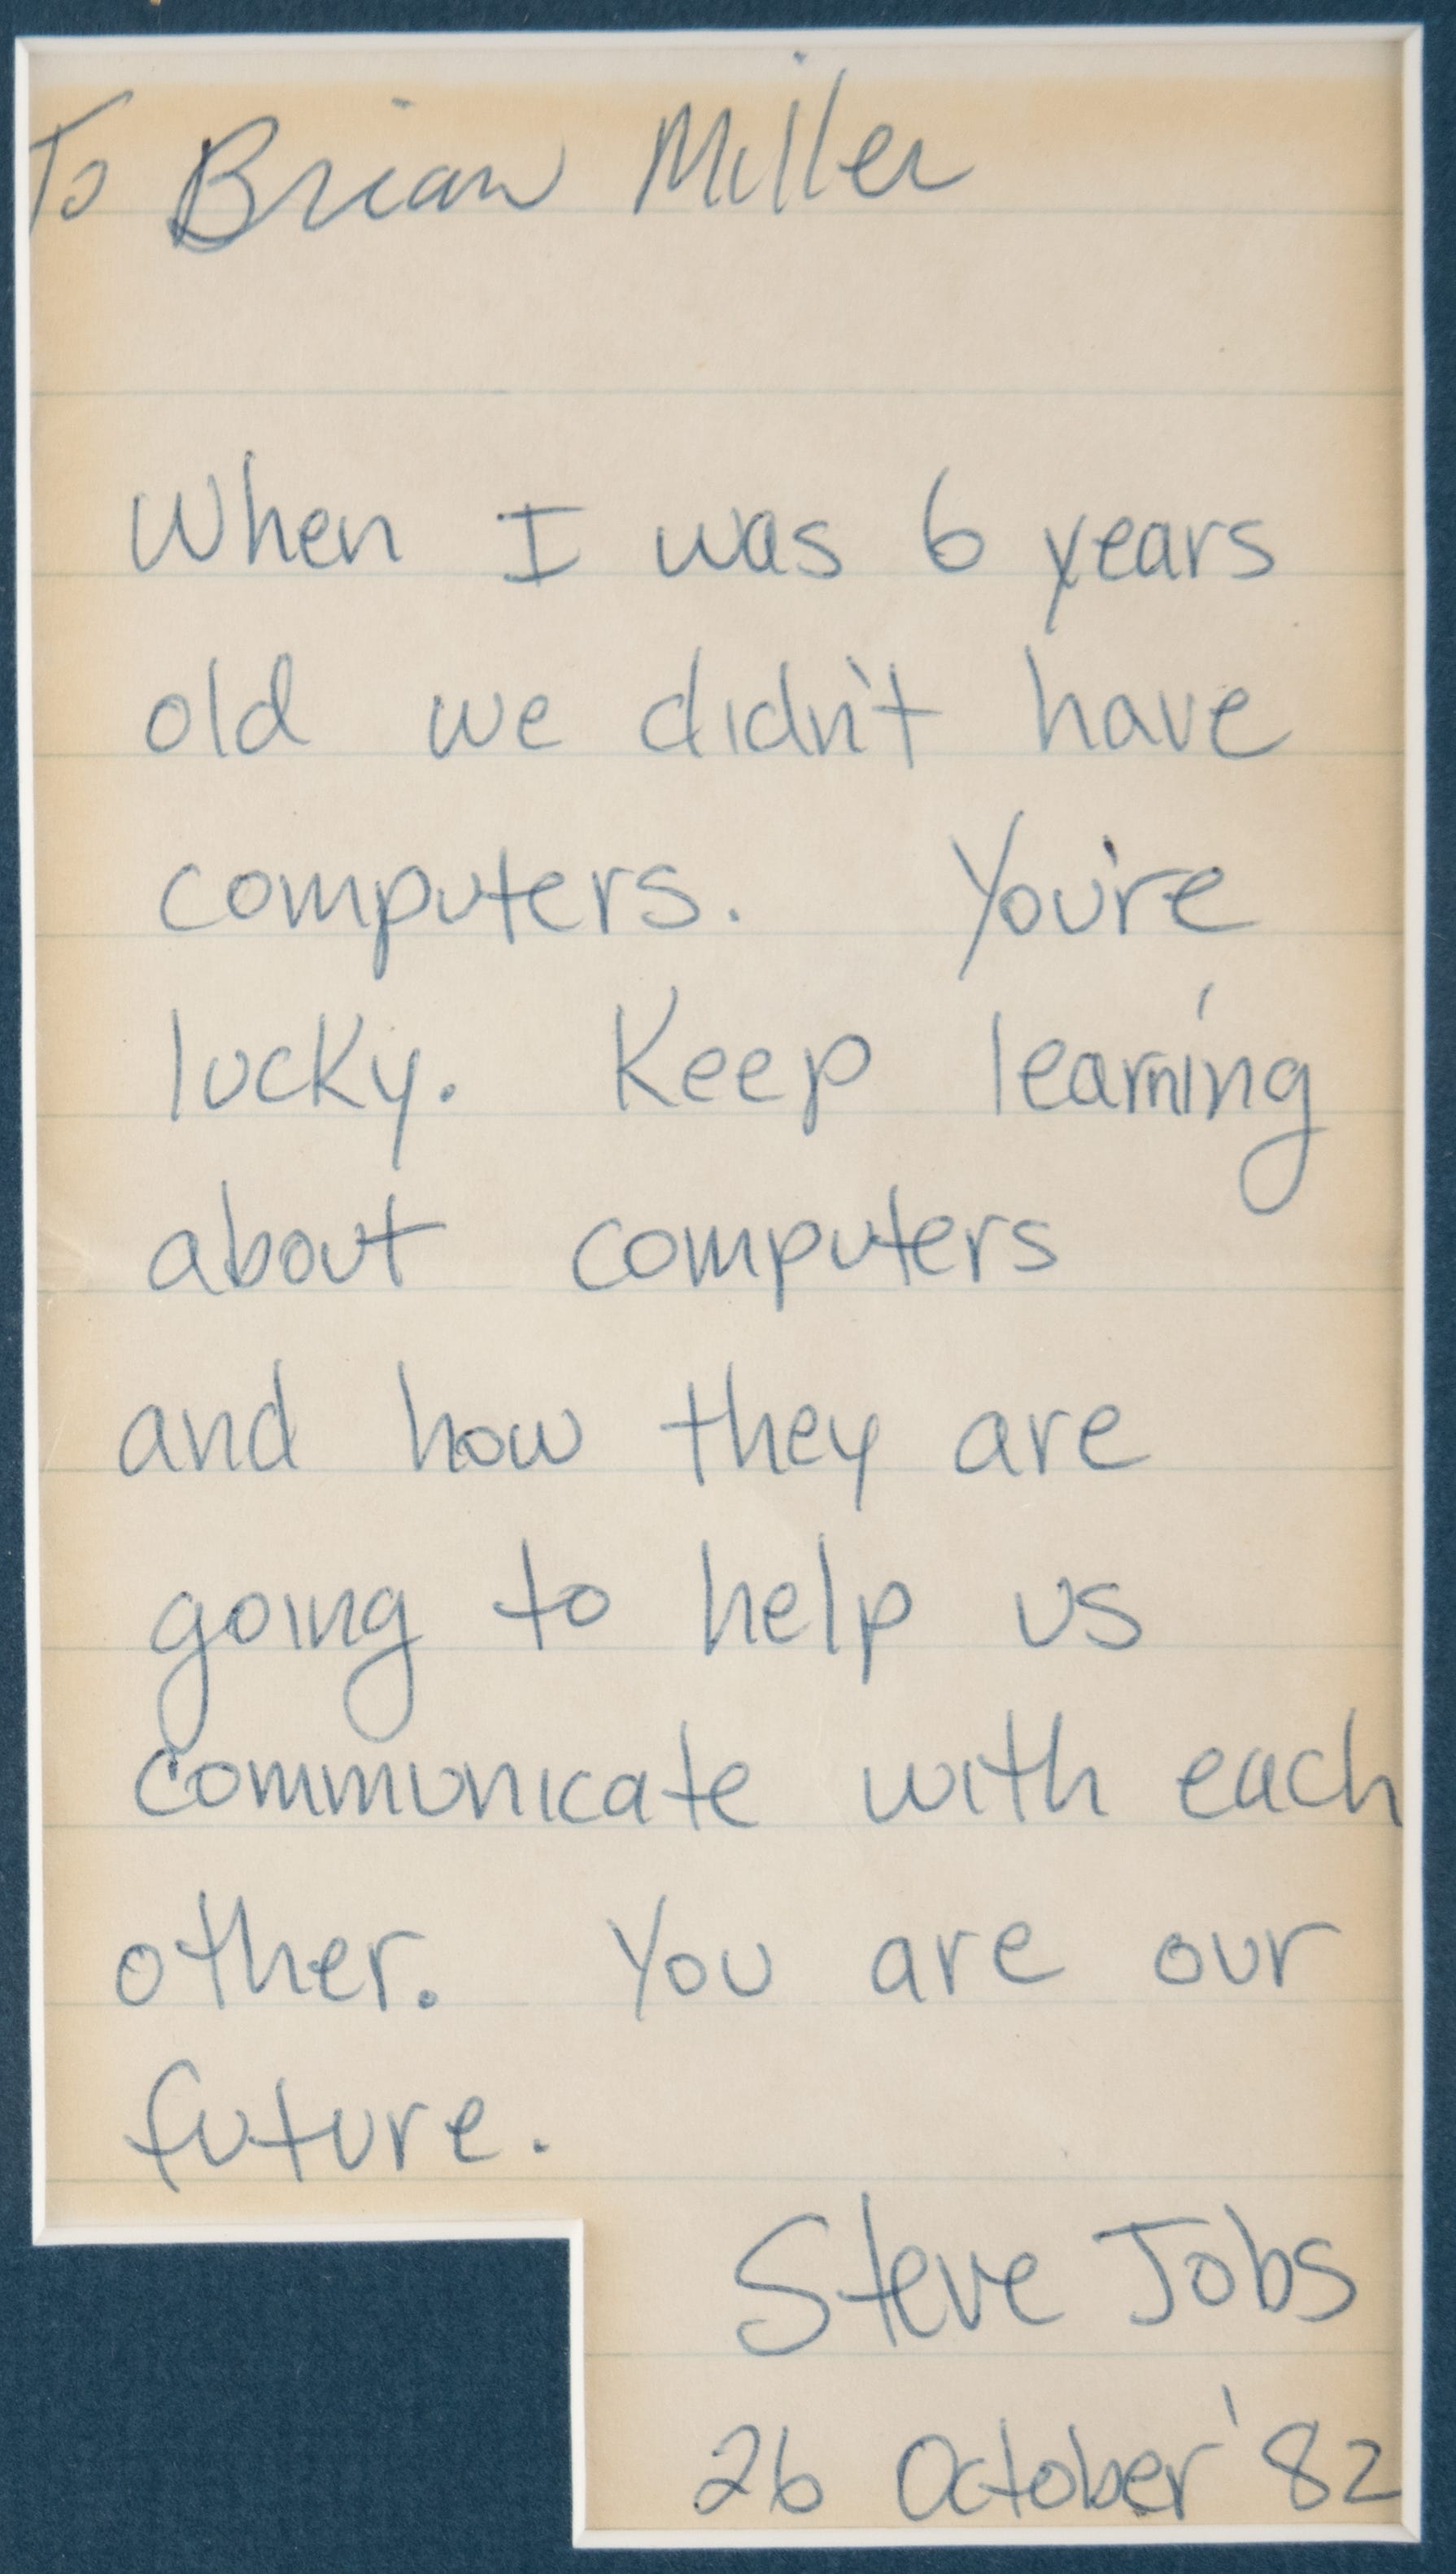 Steve Jobs handsignierte Notiz an einen 6-Jährigen namens Brian Miller